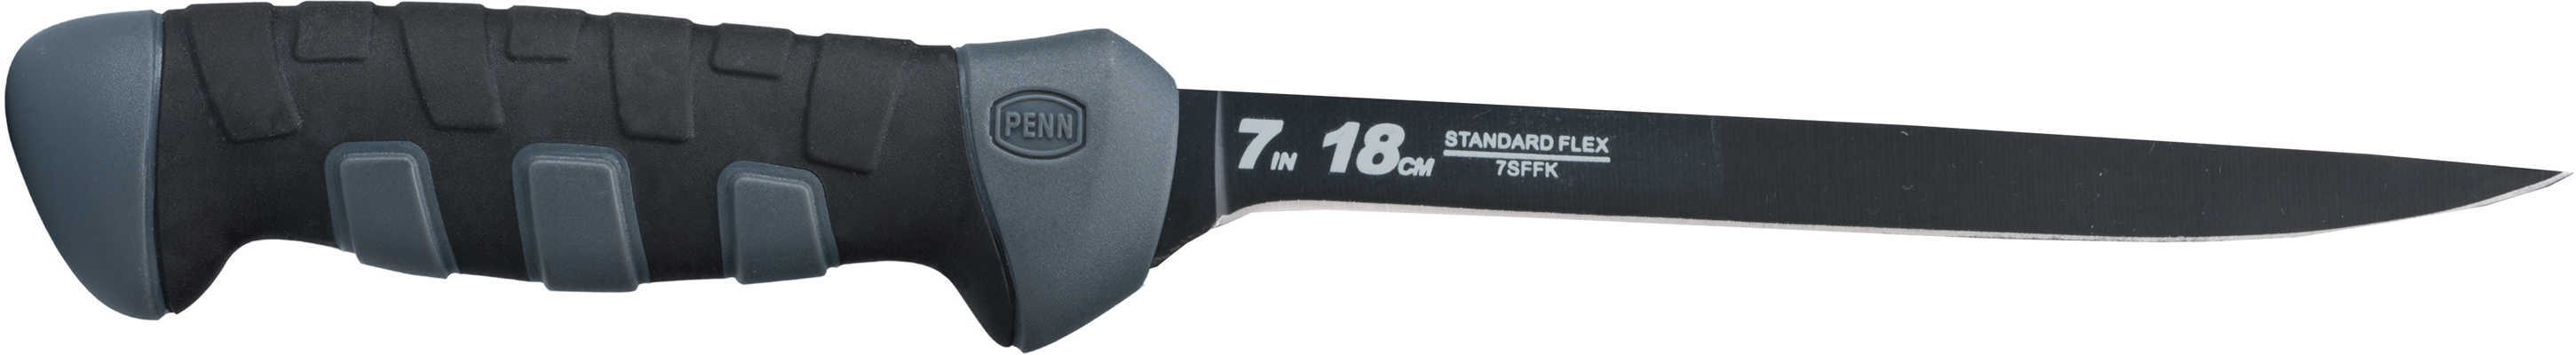 Penn Fillet Knives 7" Standard Flex, Black/Gray Md: 1366265